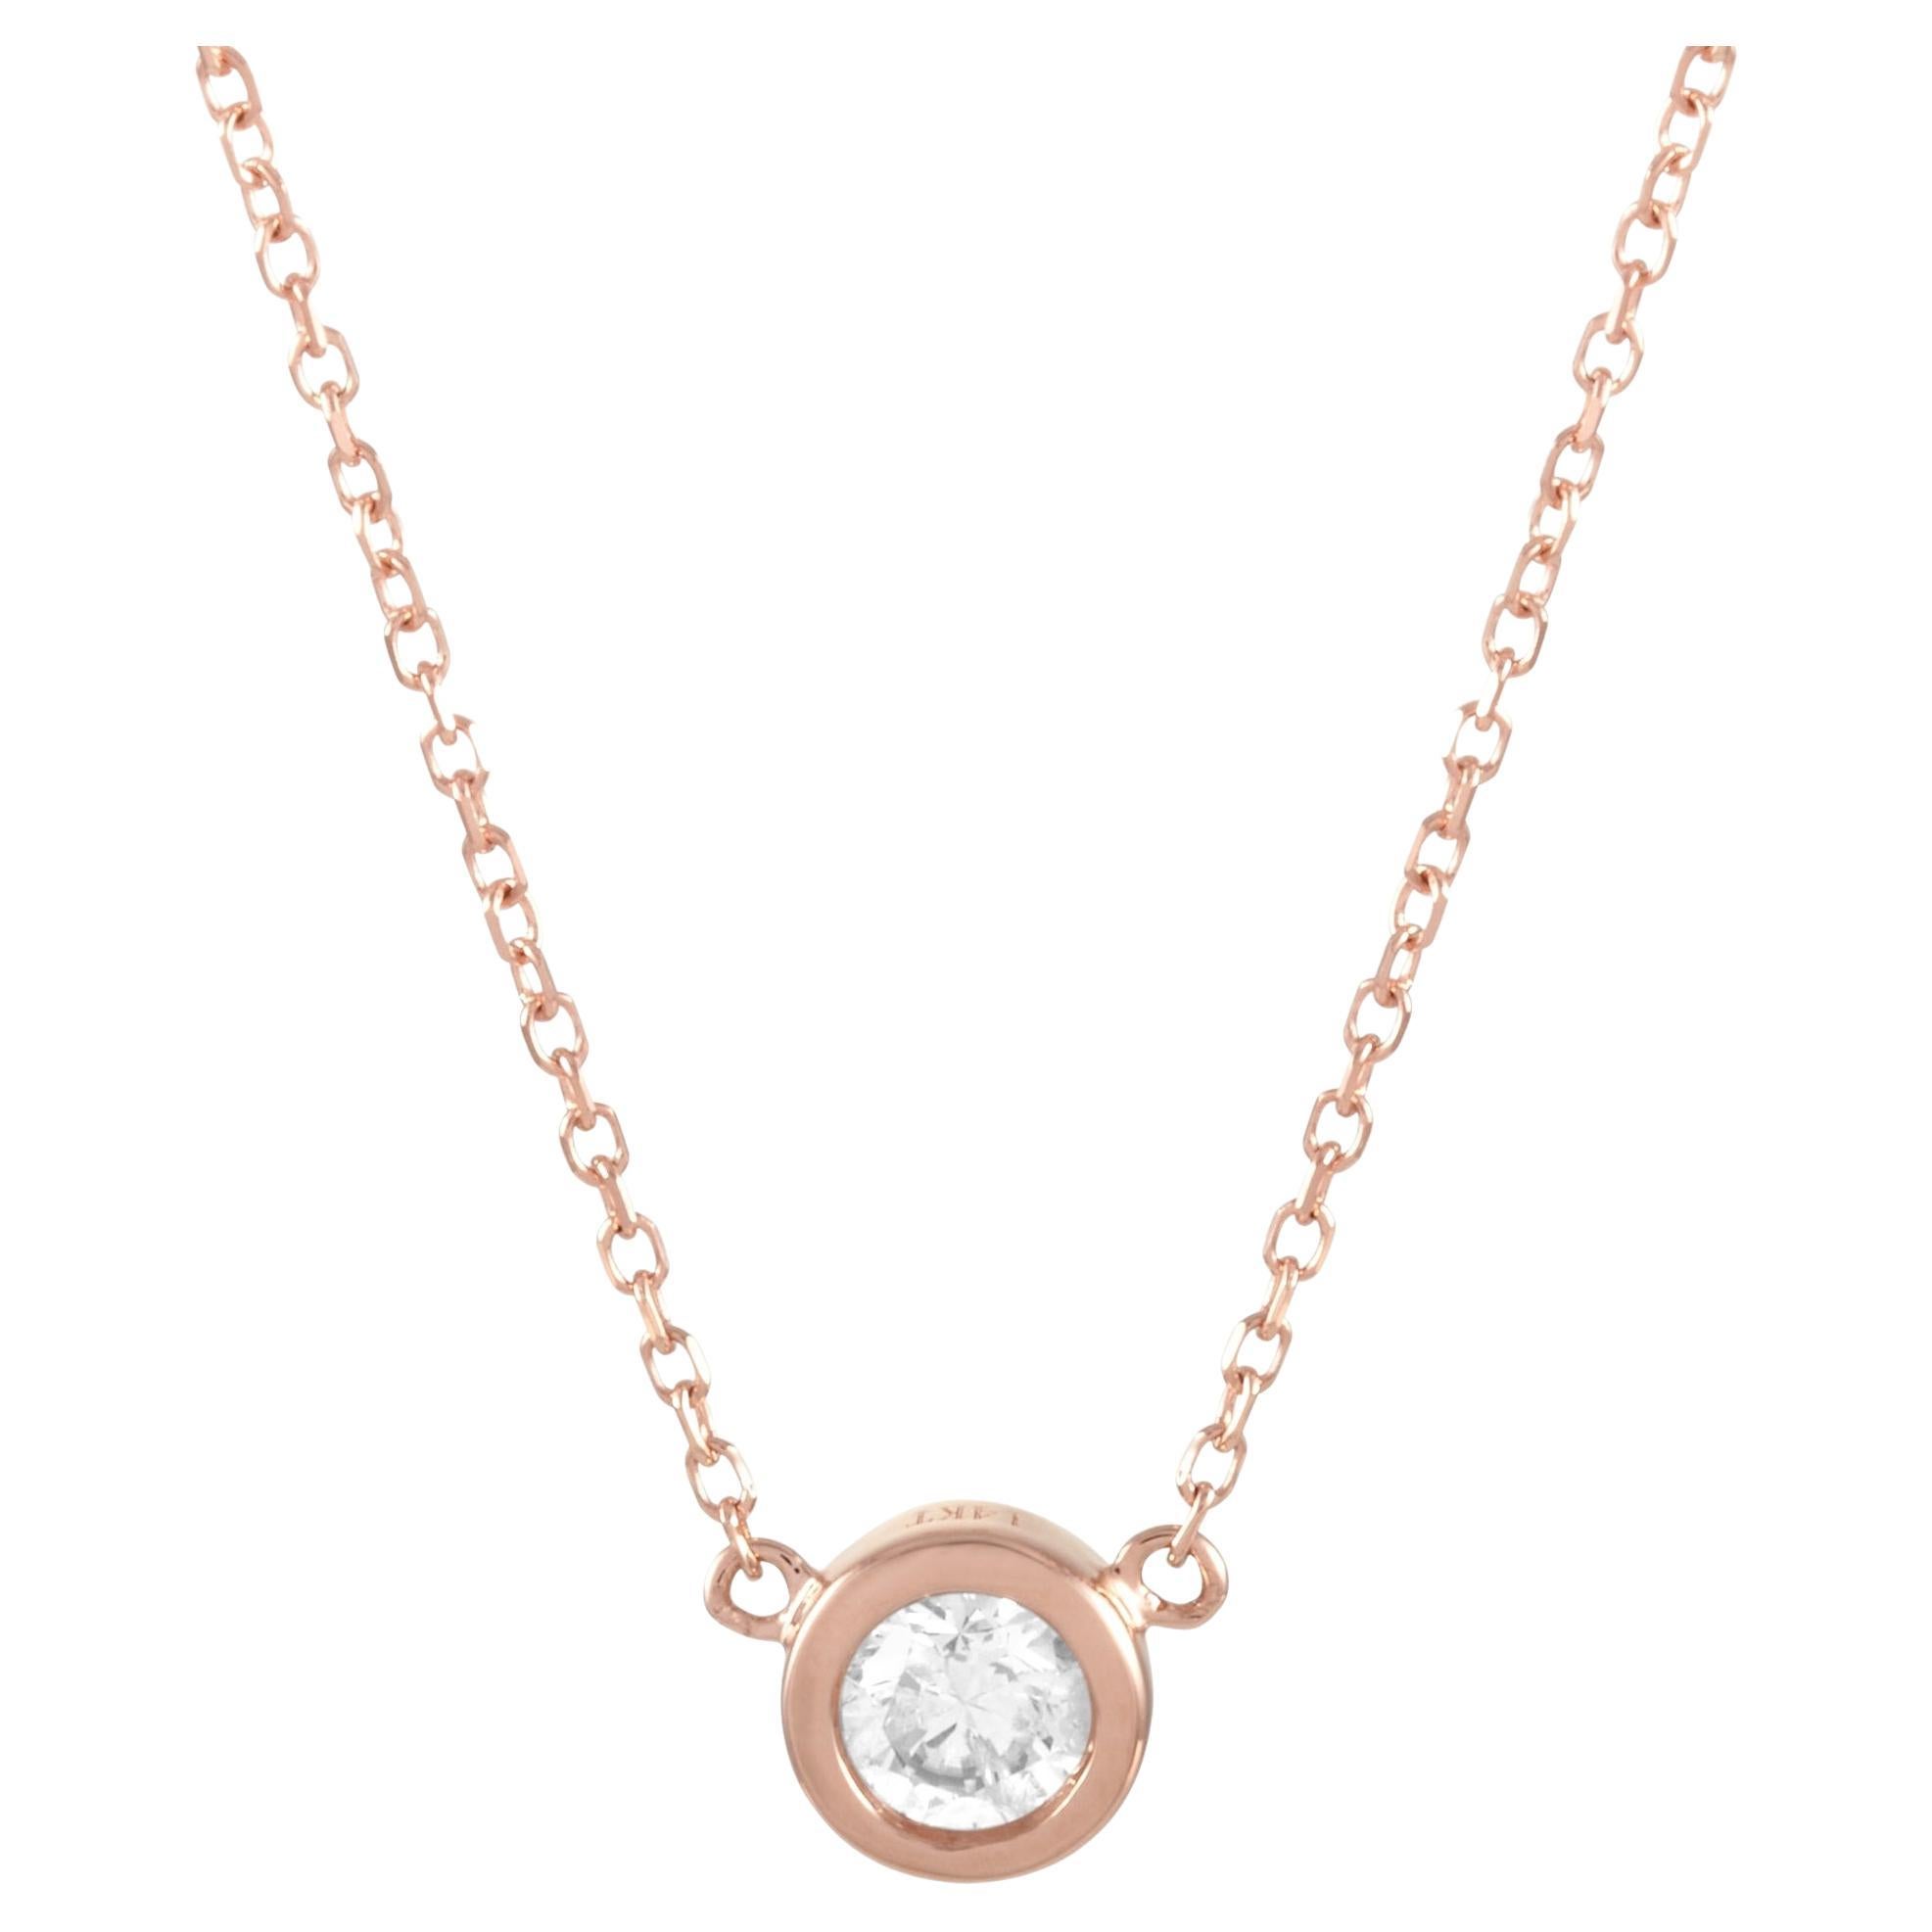 LB Exclusive 14K Rose Gold 0.20 Ct Diamond Pendant Necklace